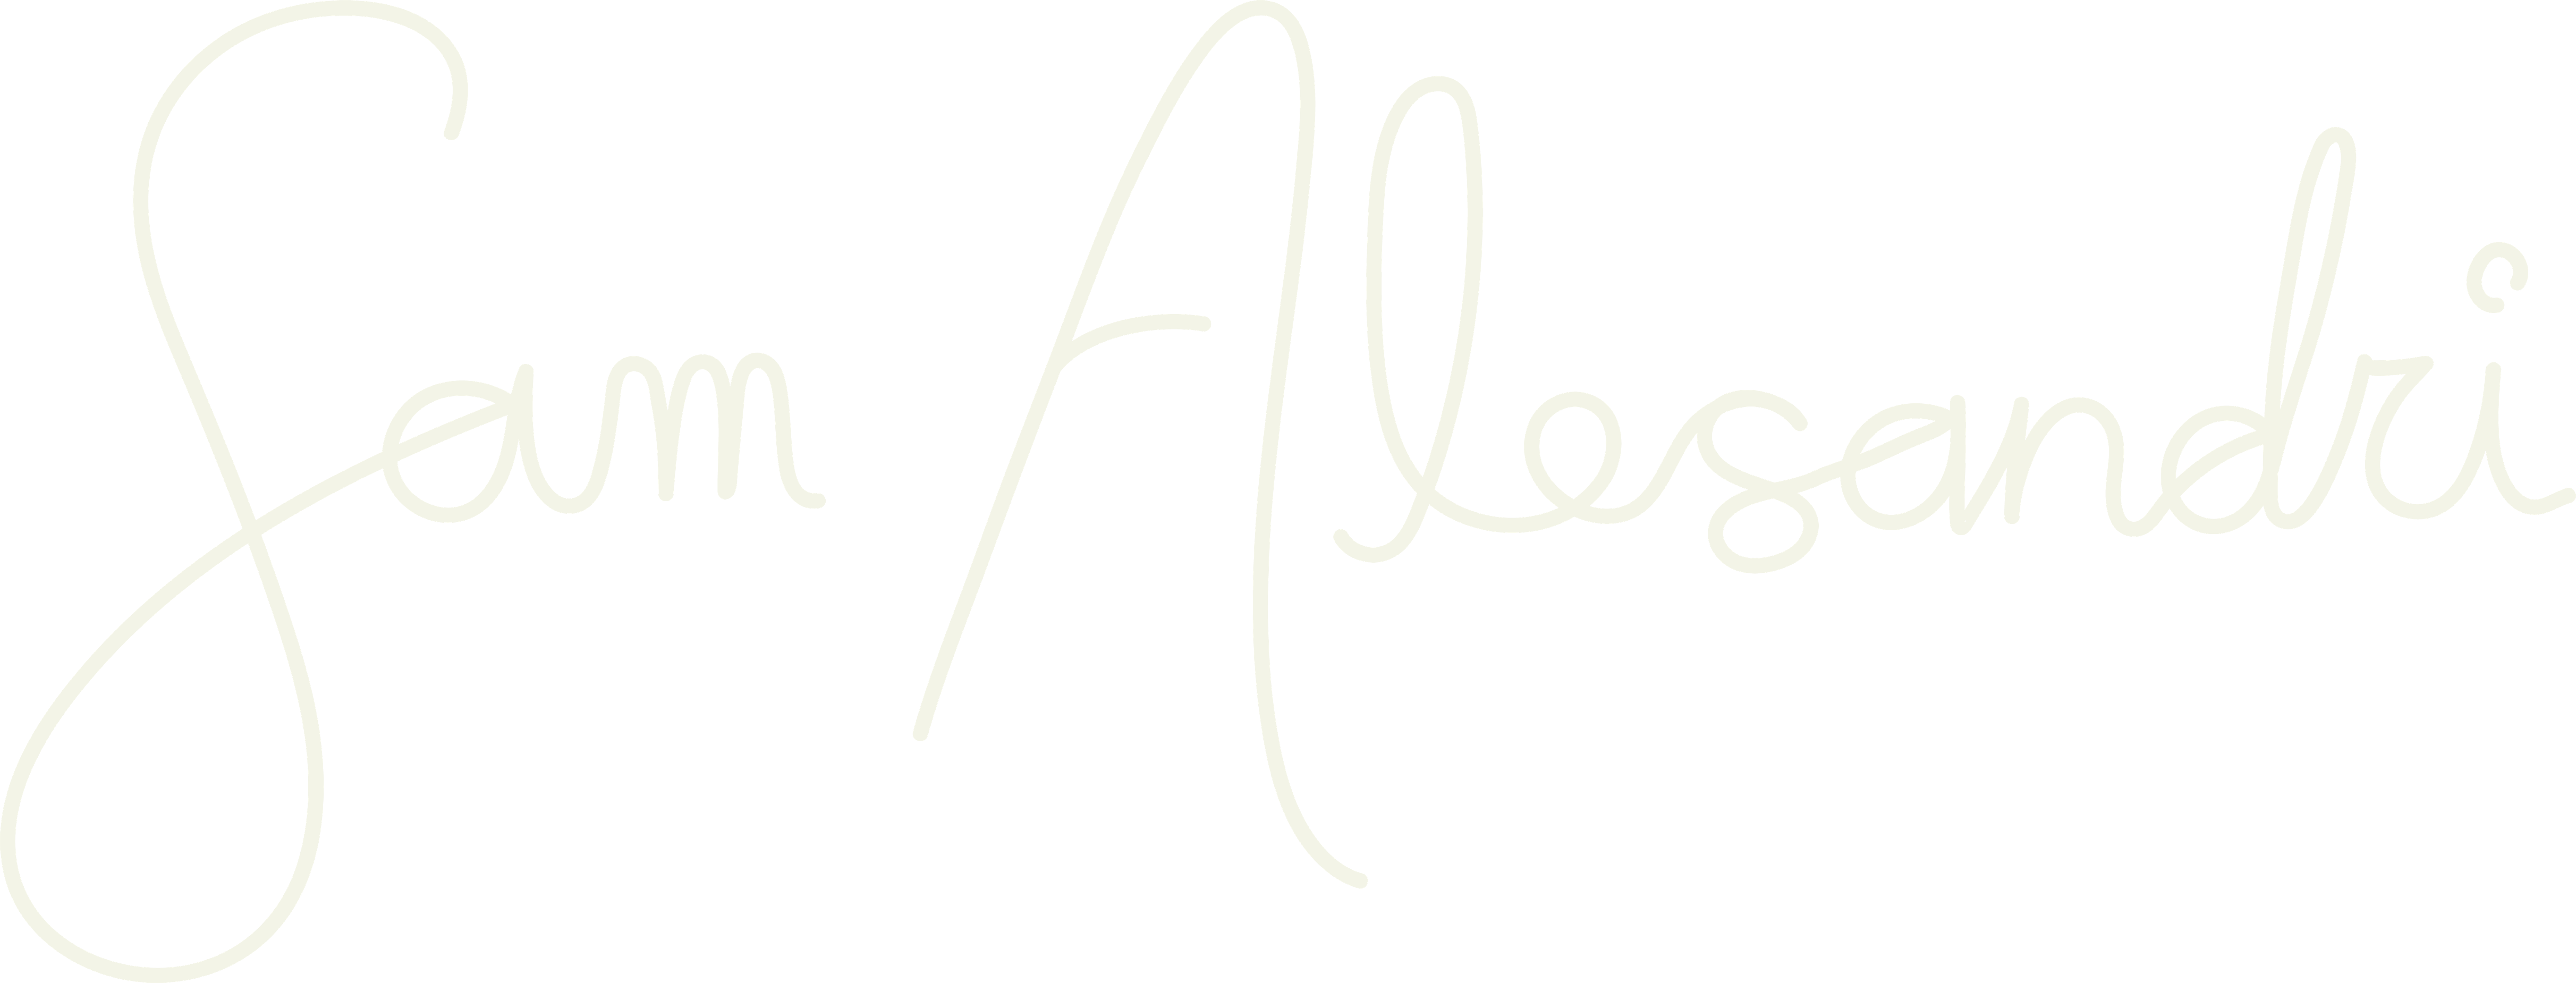 Sam Alesandri's signature as a logo.